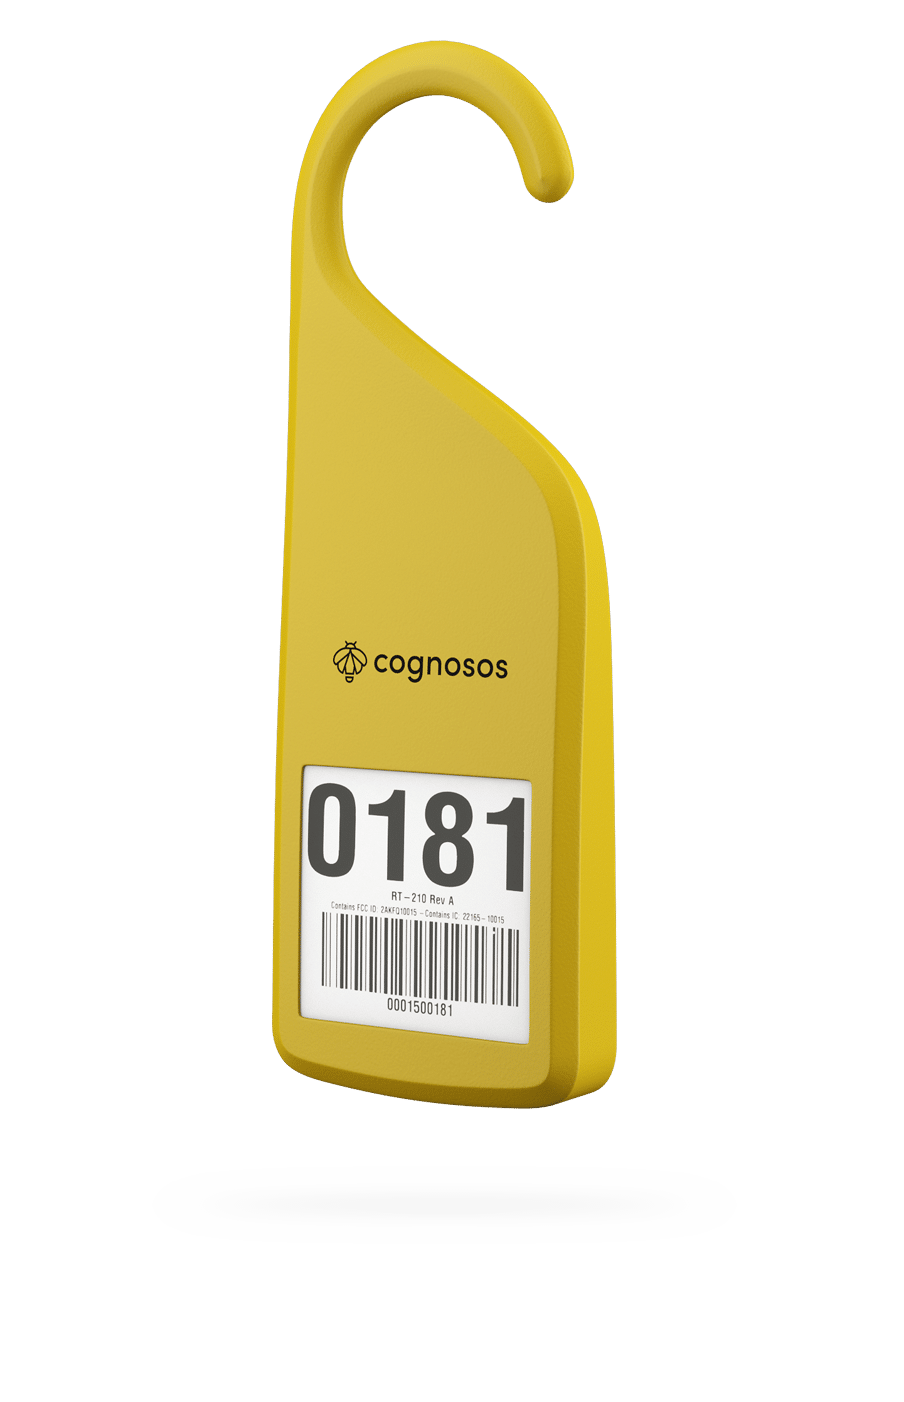 Cognosos vehicle tag